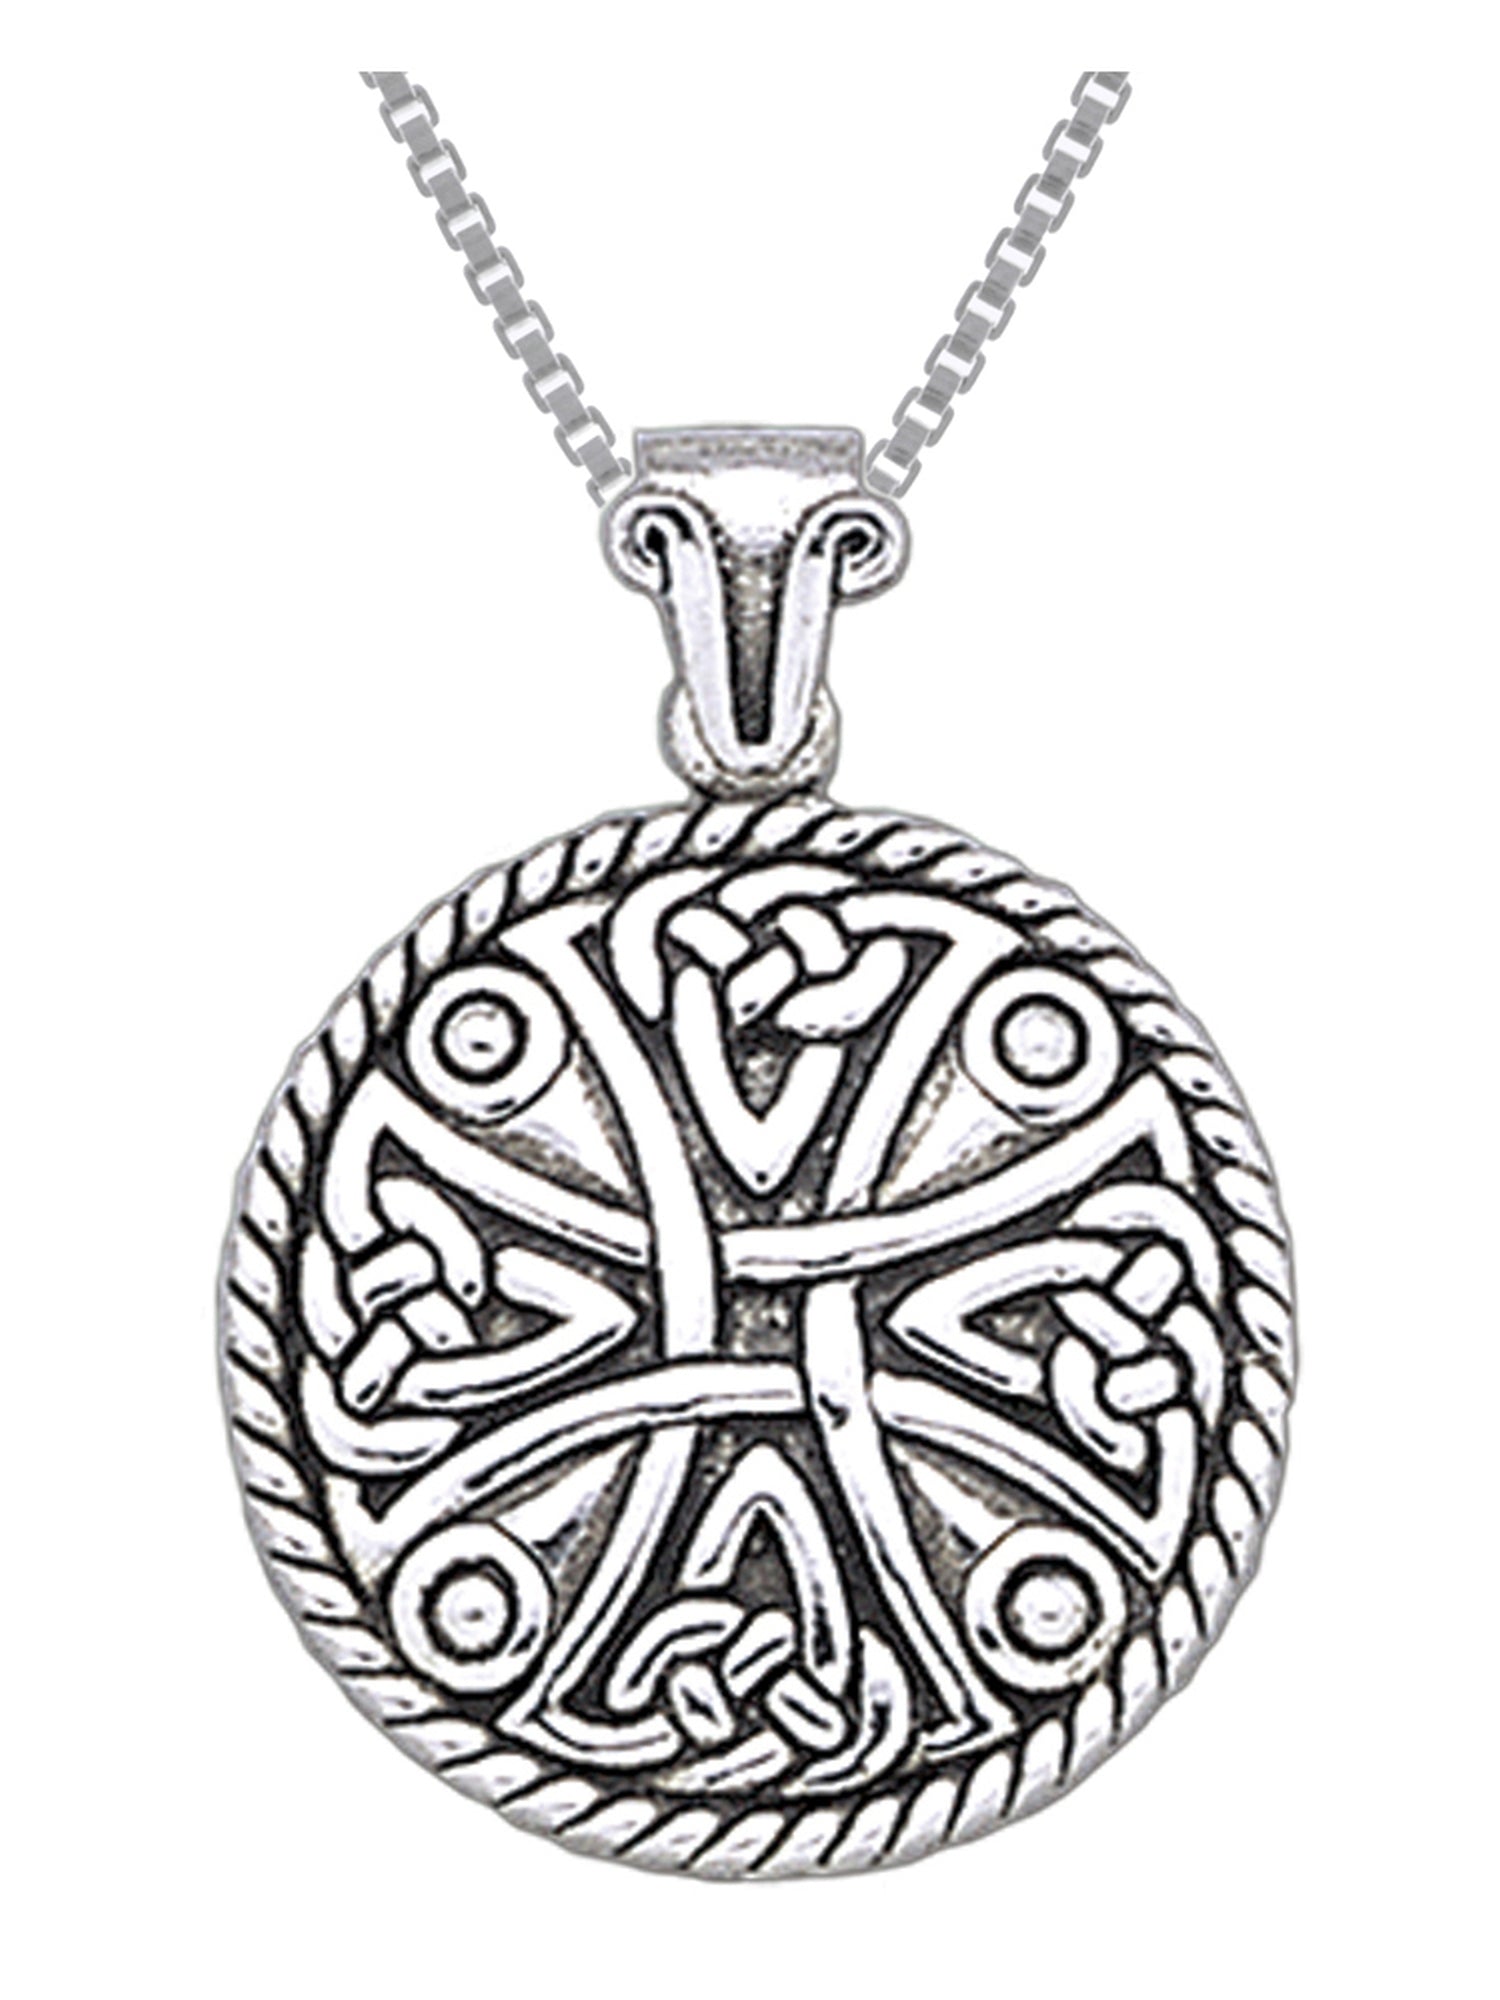 Jewelry Trends Sterling Silver Celtic Cross Templar Pendant Necklace 18"